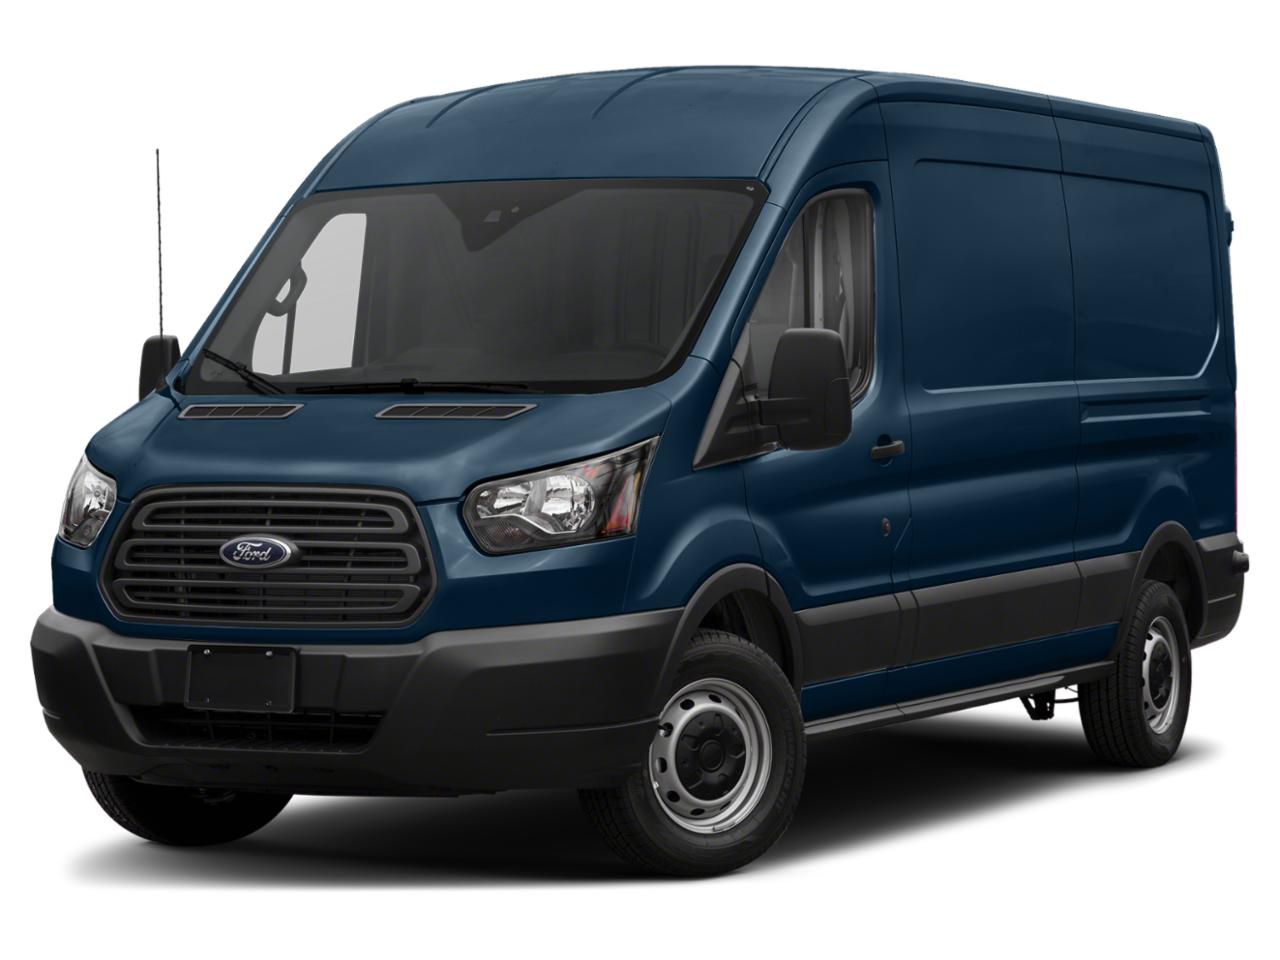 2019 Ford Transit Van Vehicle Photo in Saint Charles, IL 60174